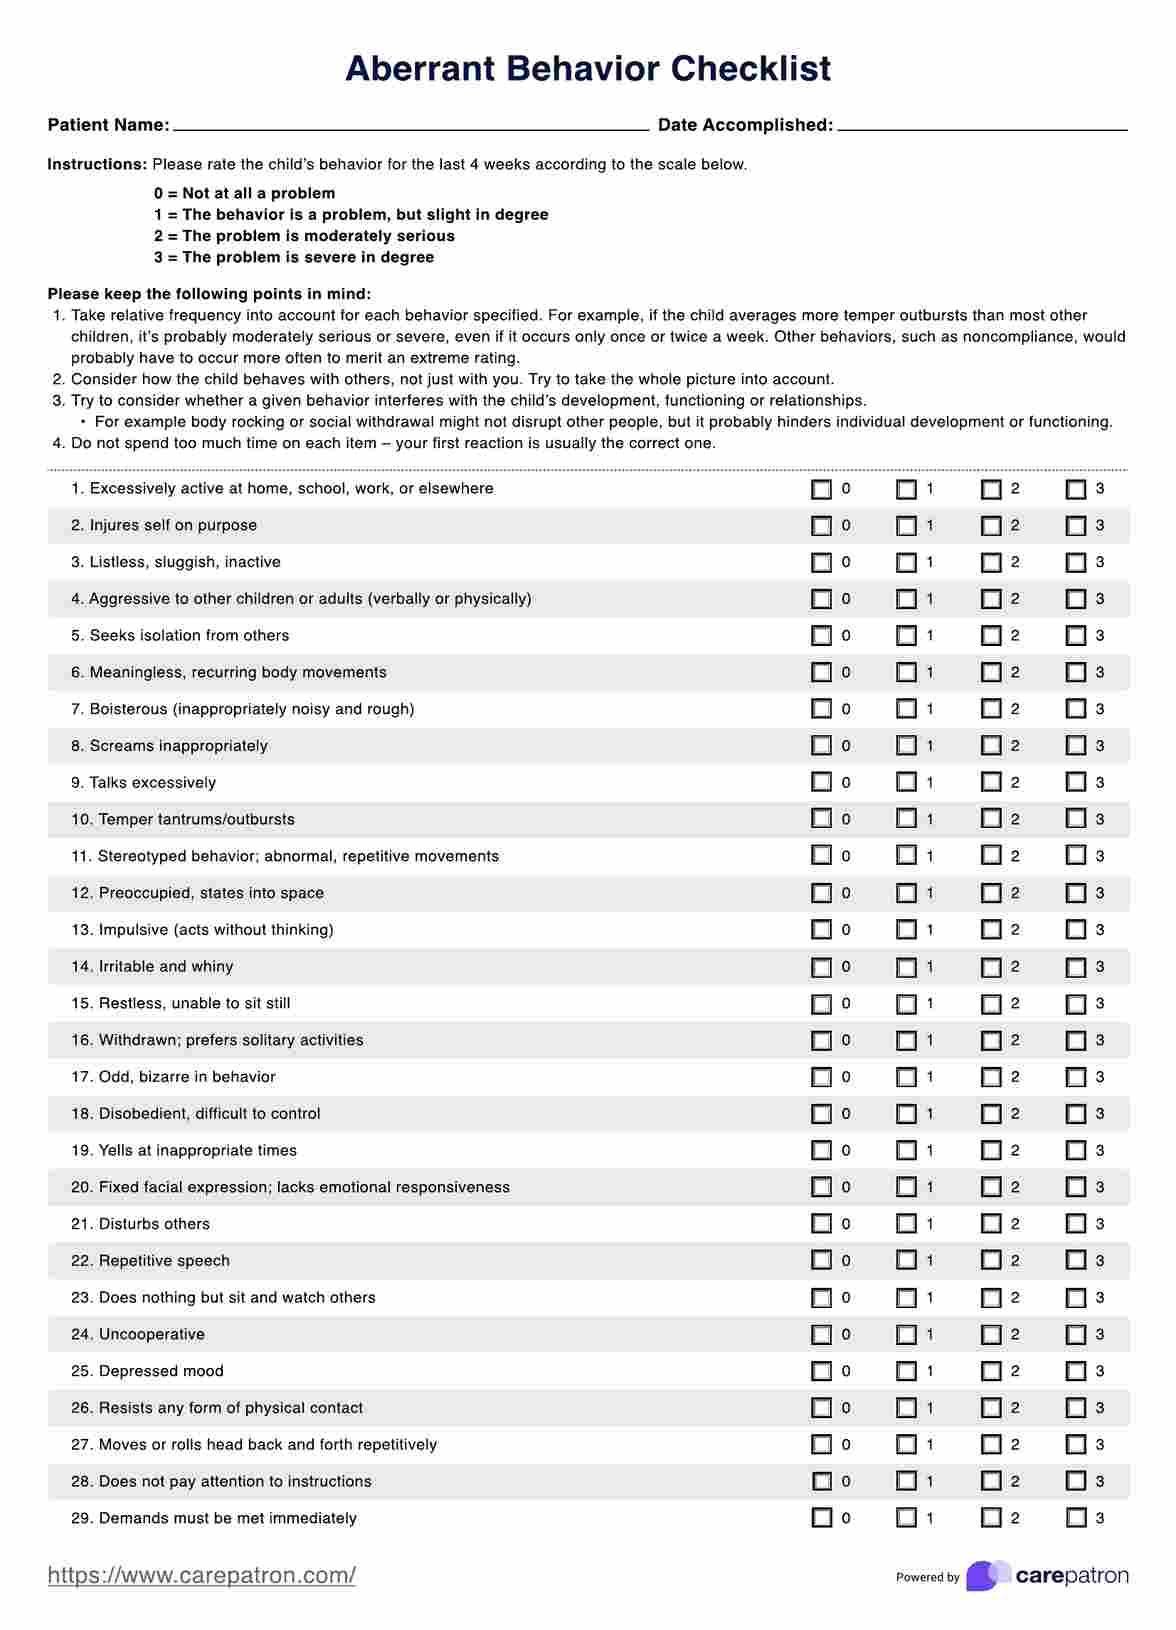 Aberrant Behavior Checklist PDF Example